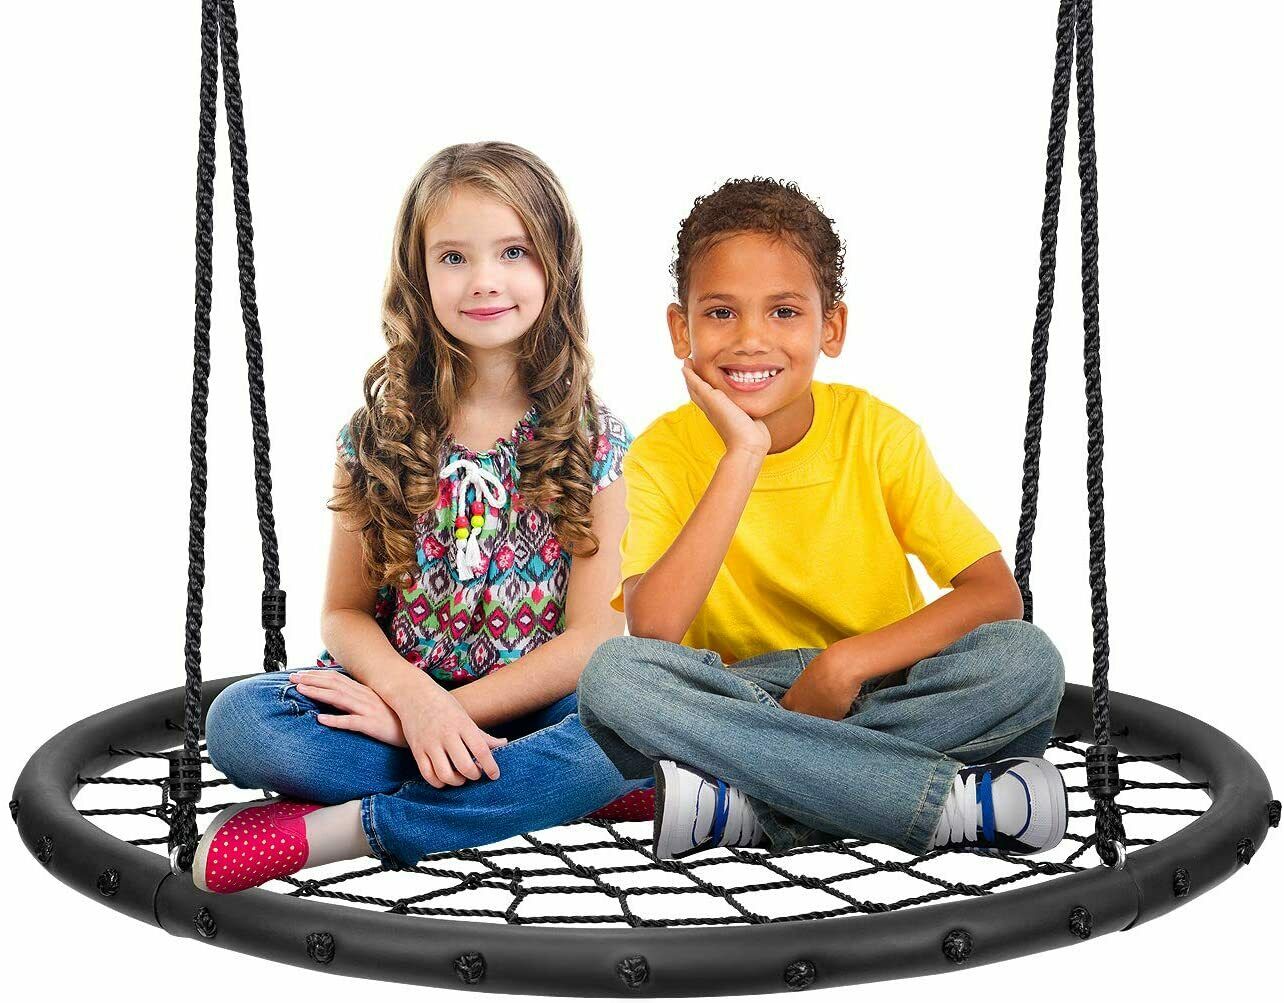 Round Tree Swing Set - Spider Web Hanging Saucer For Kids In Playground/backyard